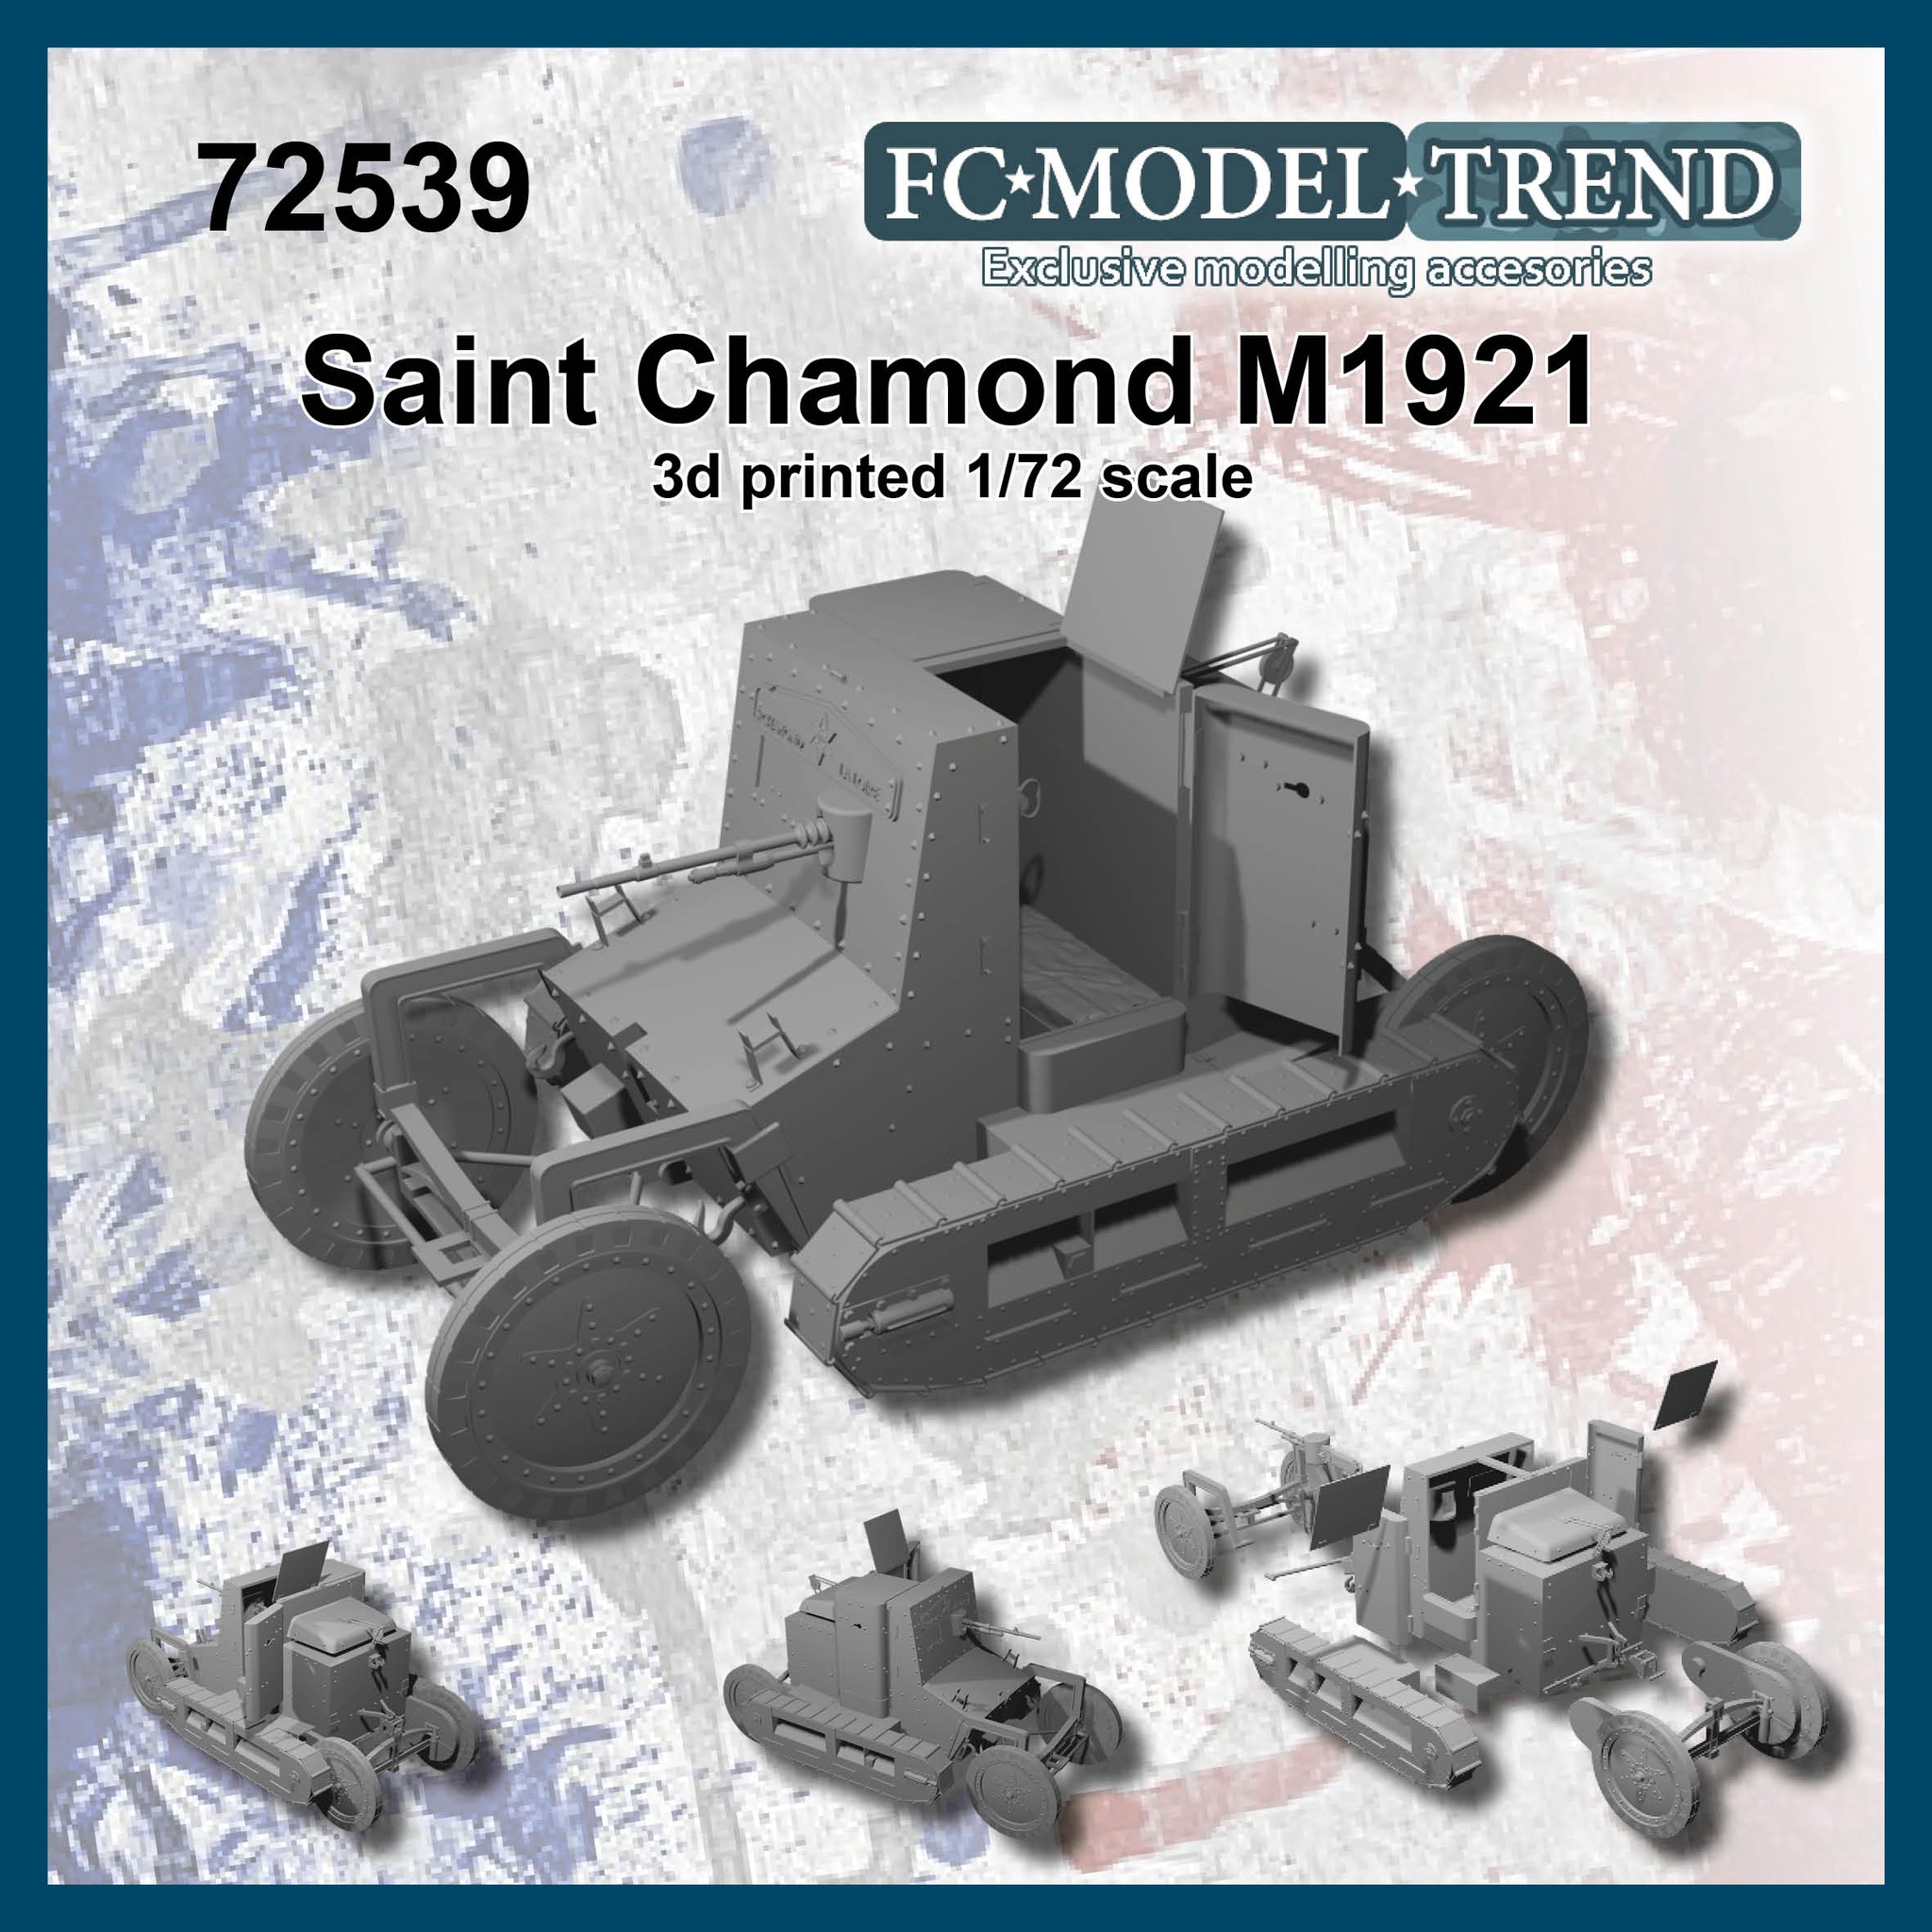 Saint Chamond M1921